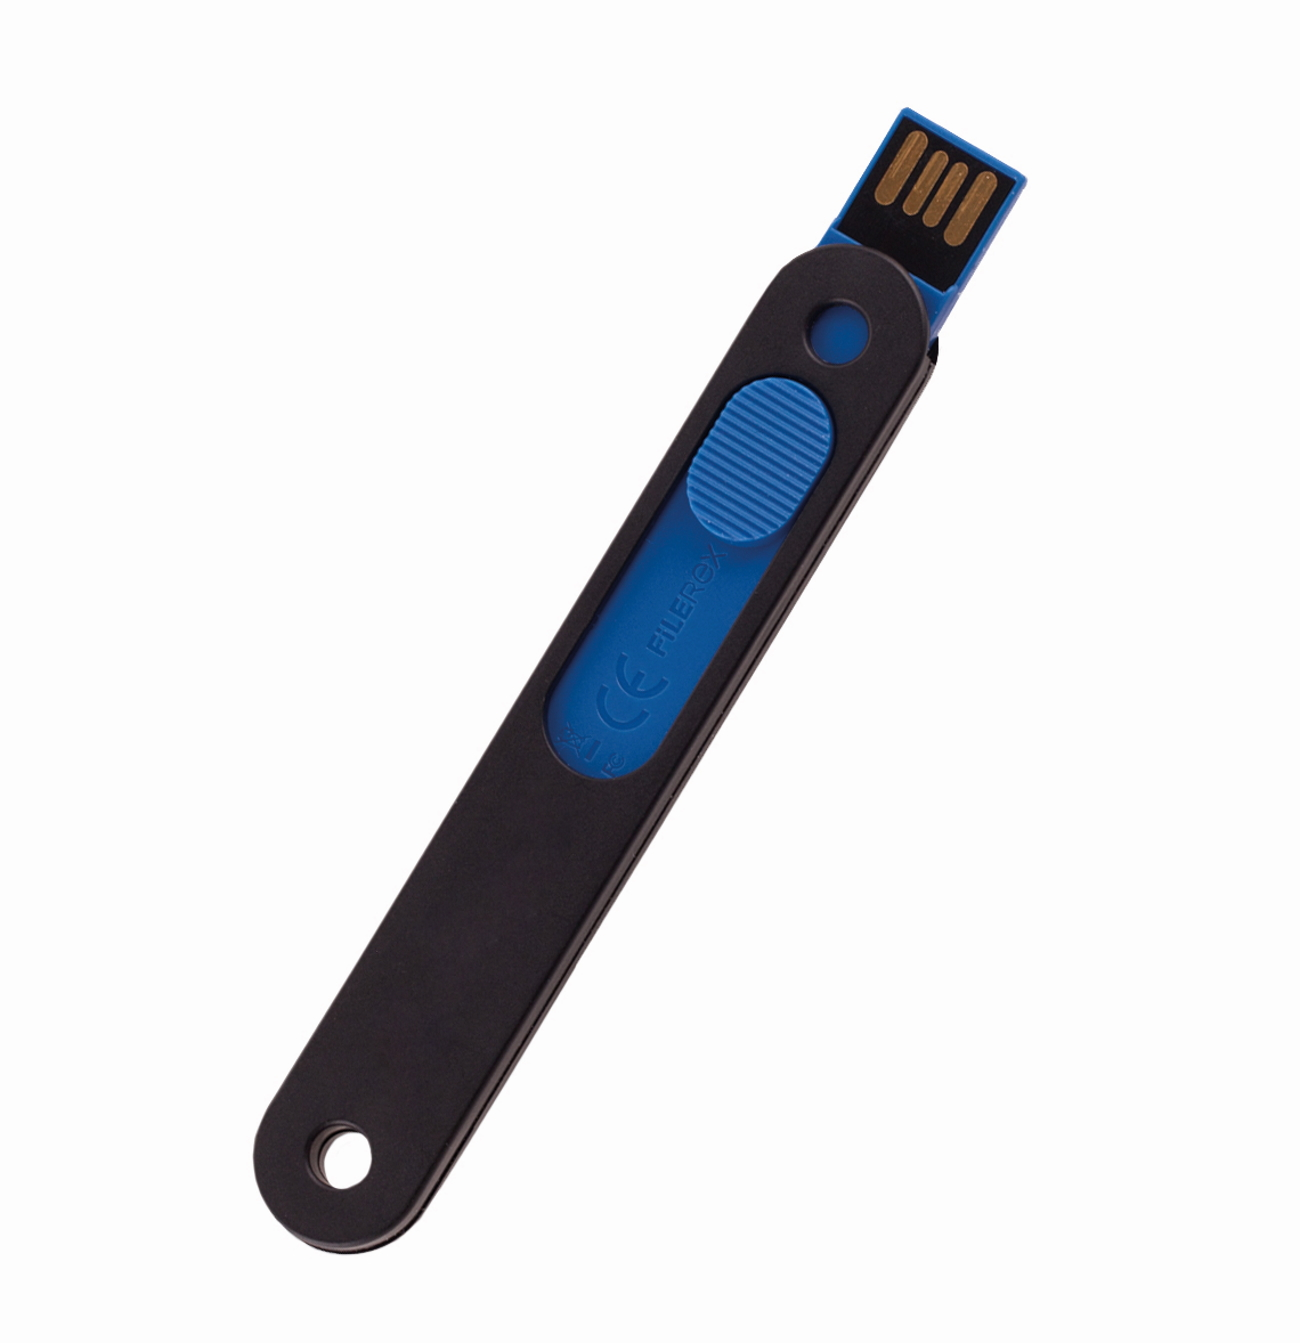 FILEREX BlackE USB-Stick Sky - Blue) - (Sky 2.0 #GEN2 Original / Blue, 8GB 8 GB) (Black FiLEREX